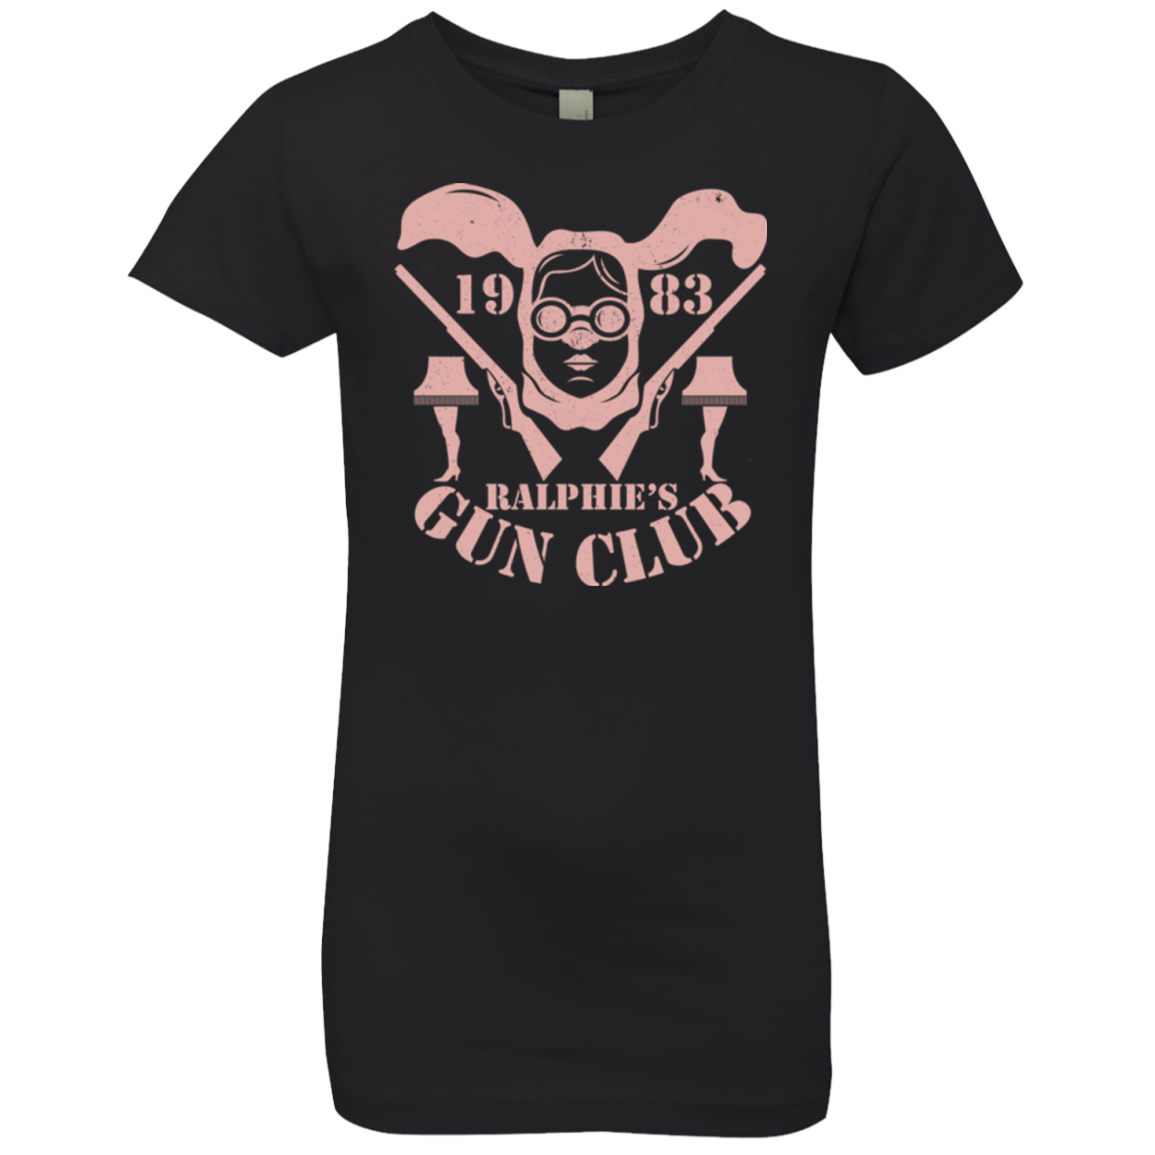 Ralphies Gun Club Girls Premium T-Shirt